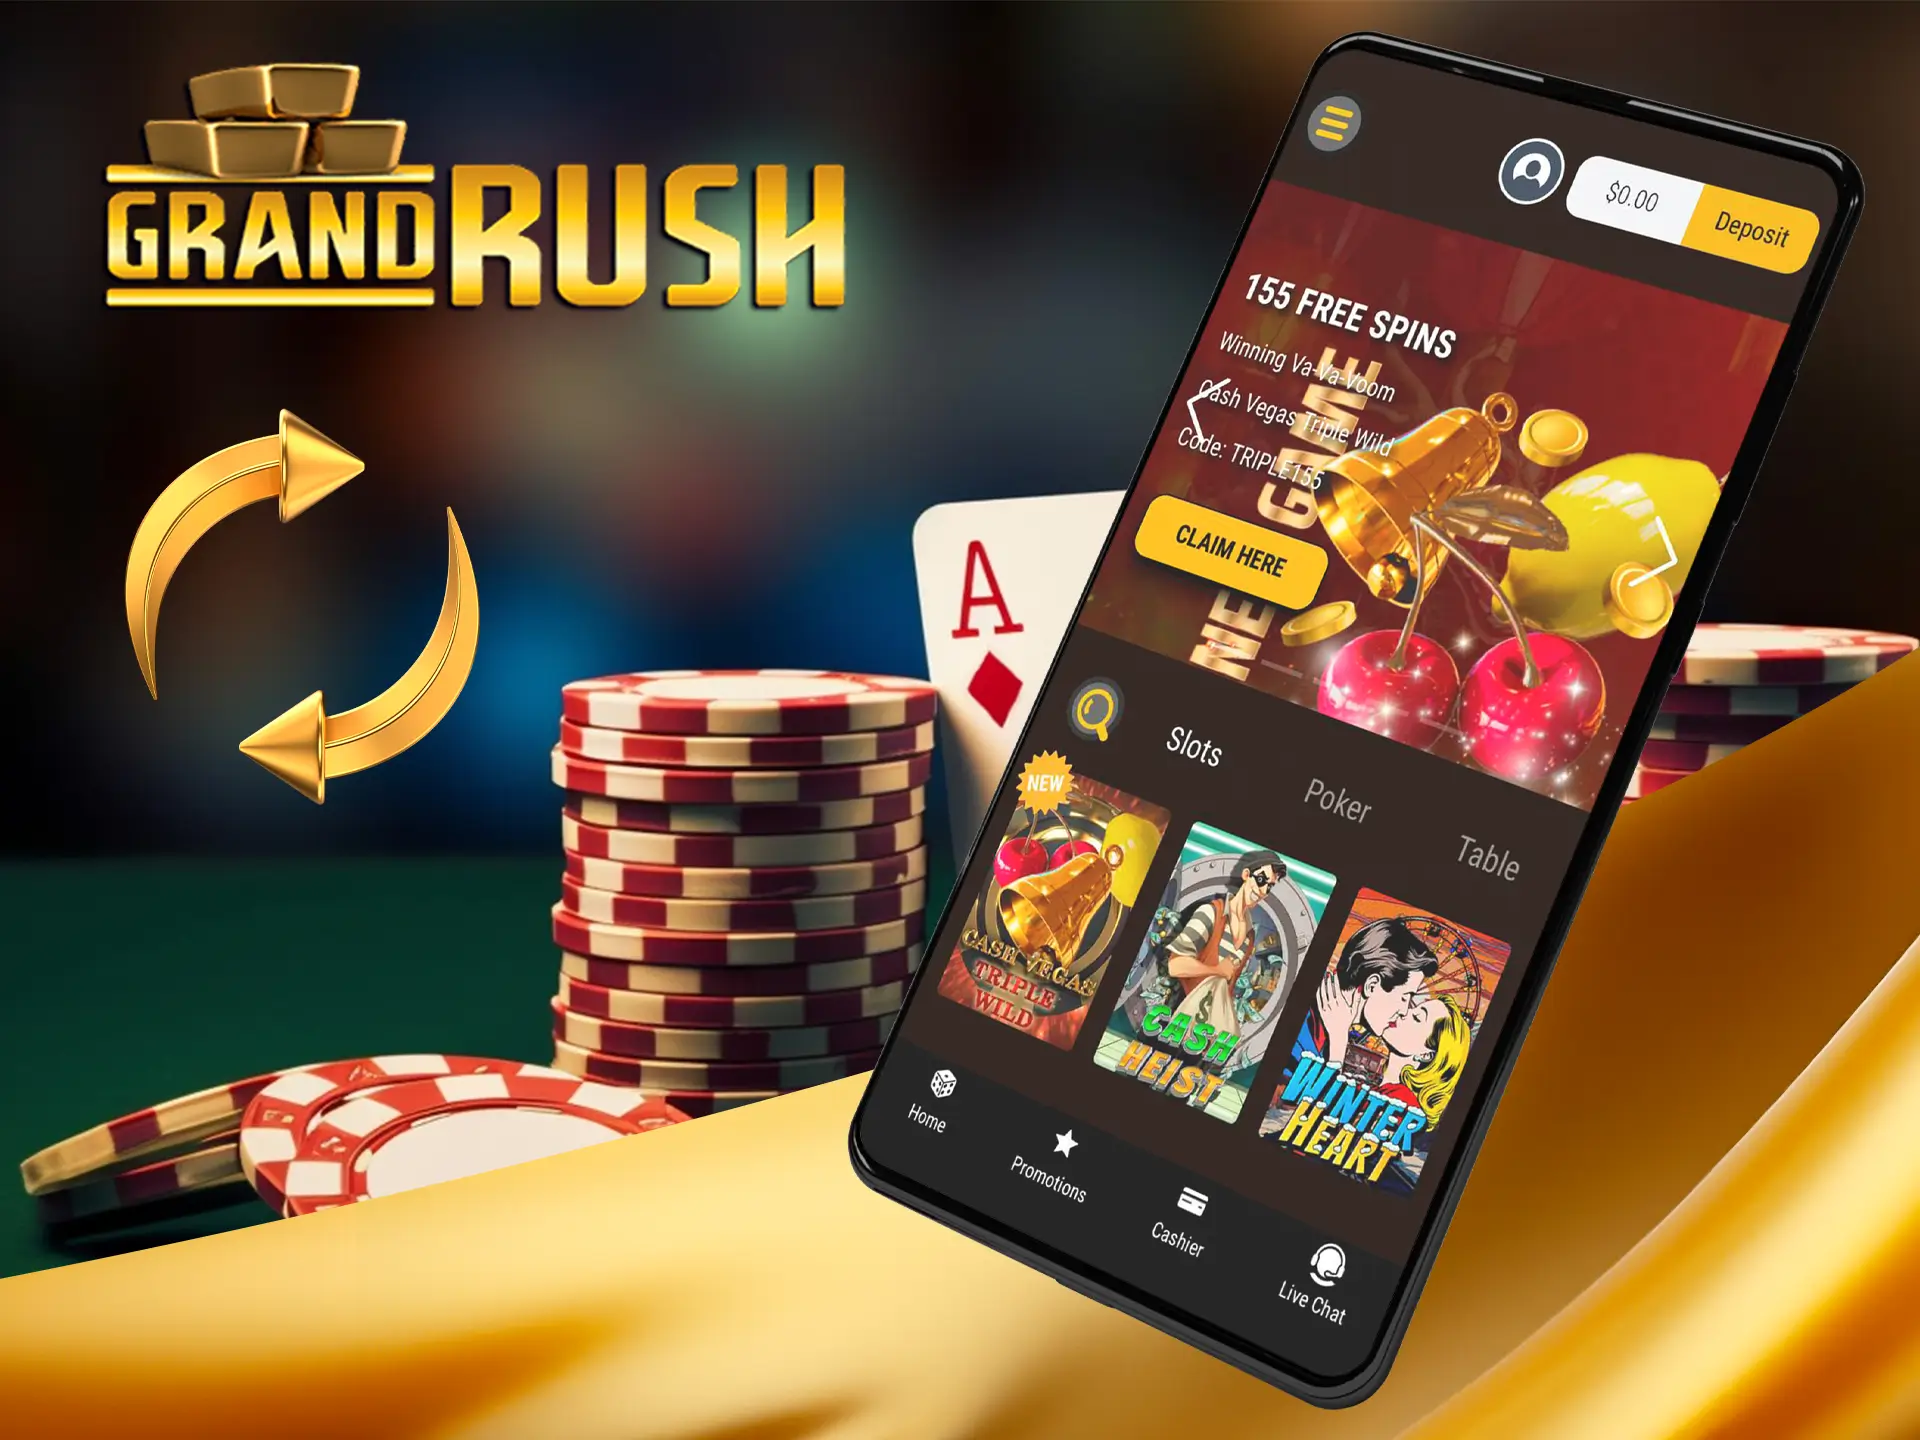 Update the Grand Rush casino app in 3 easy steps.